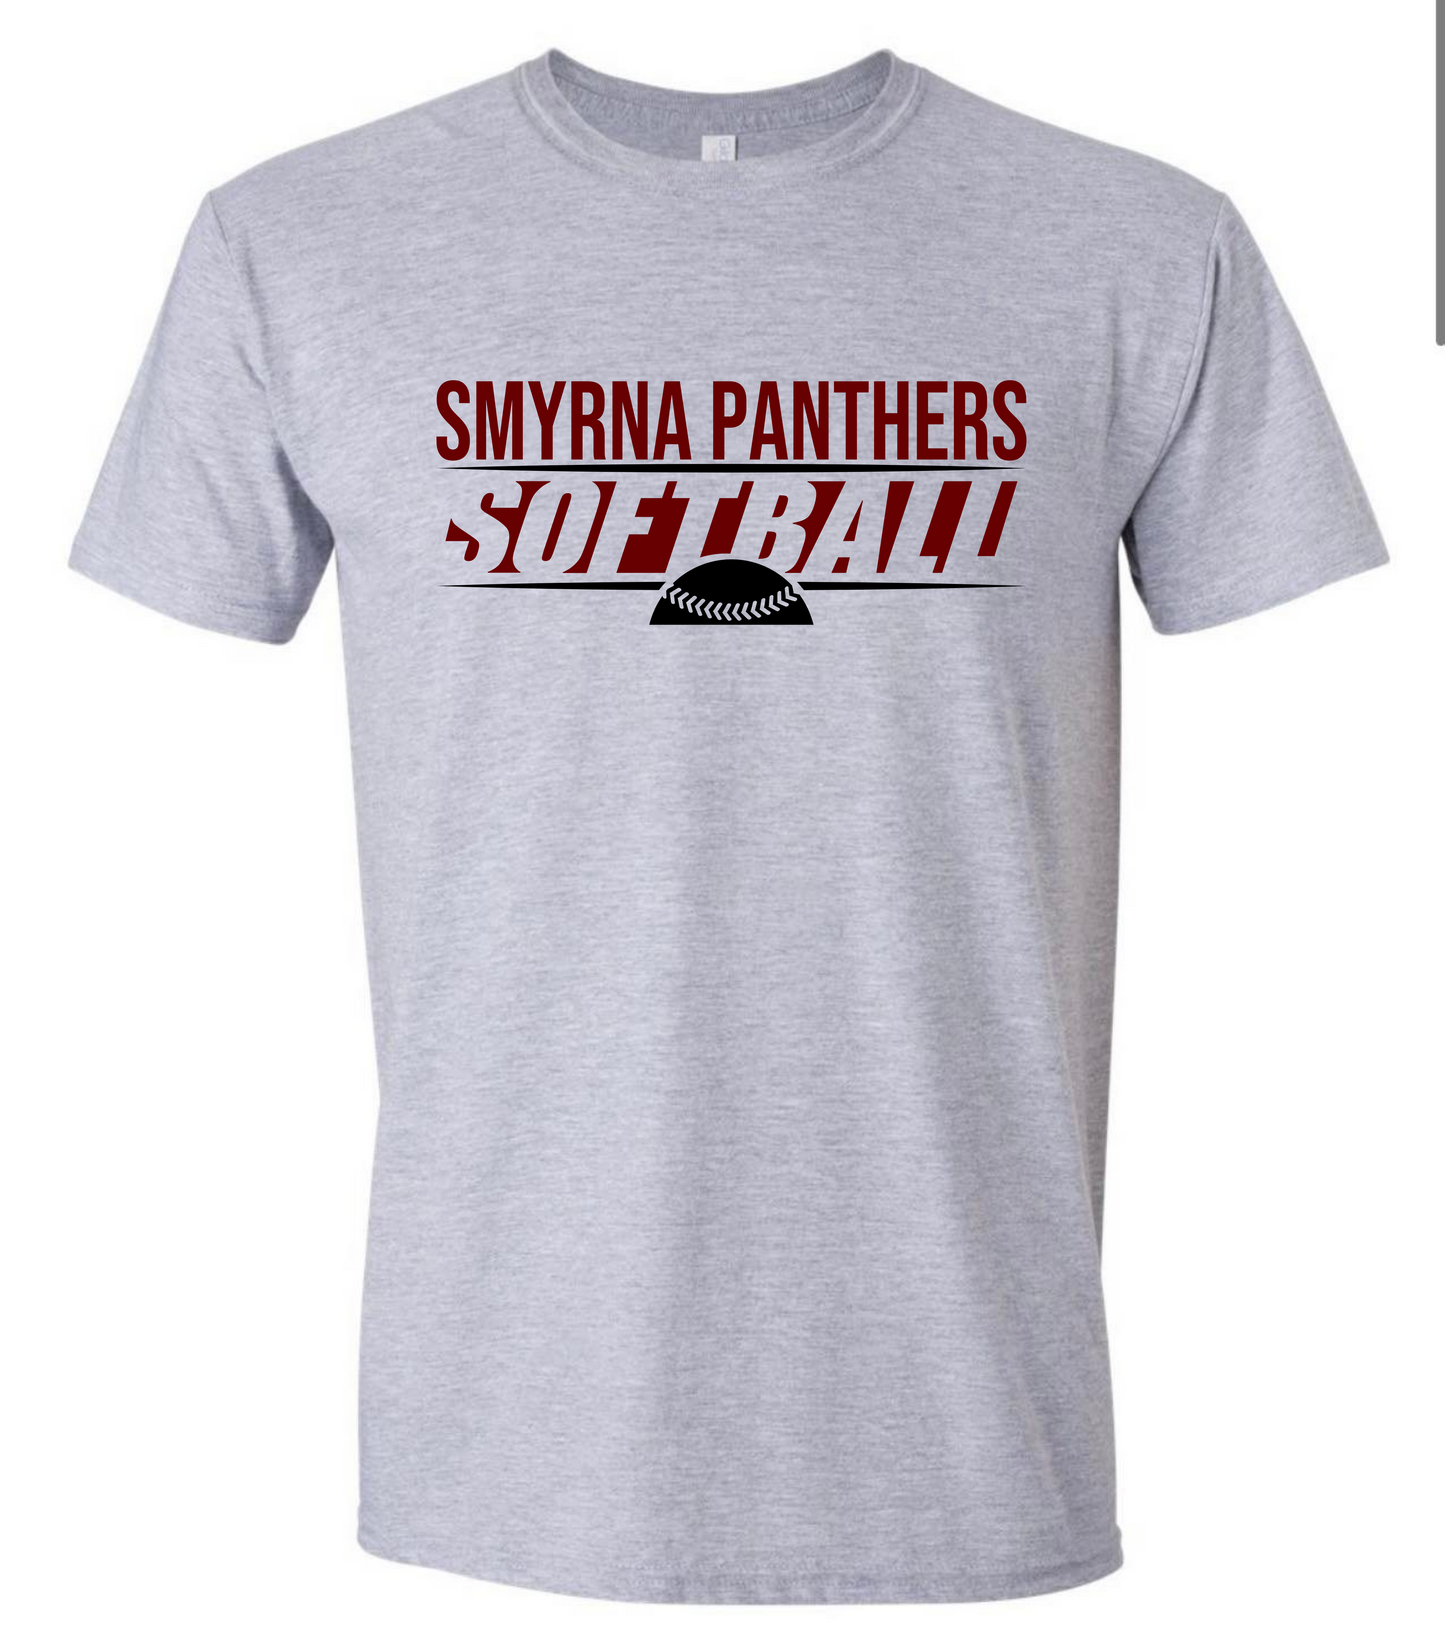 Smyrna Panthers Softball Tshirt